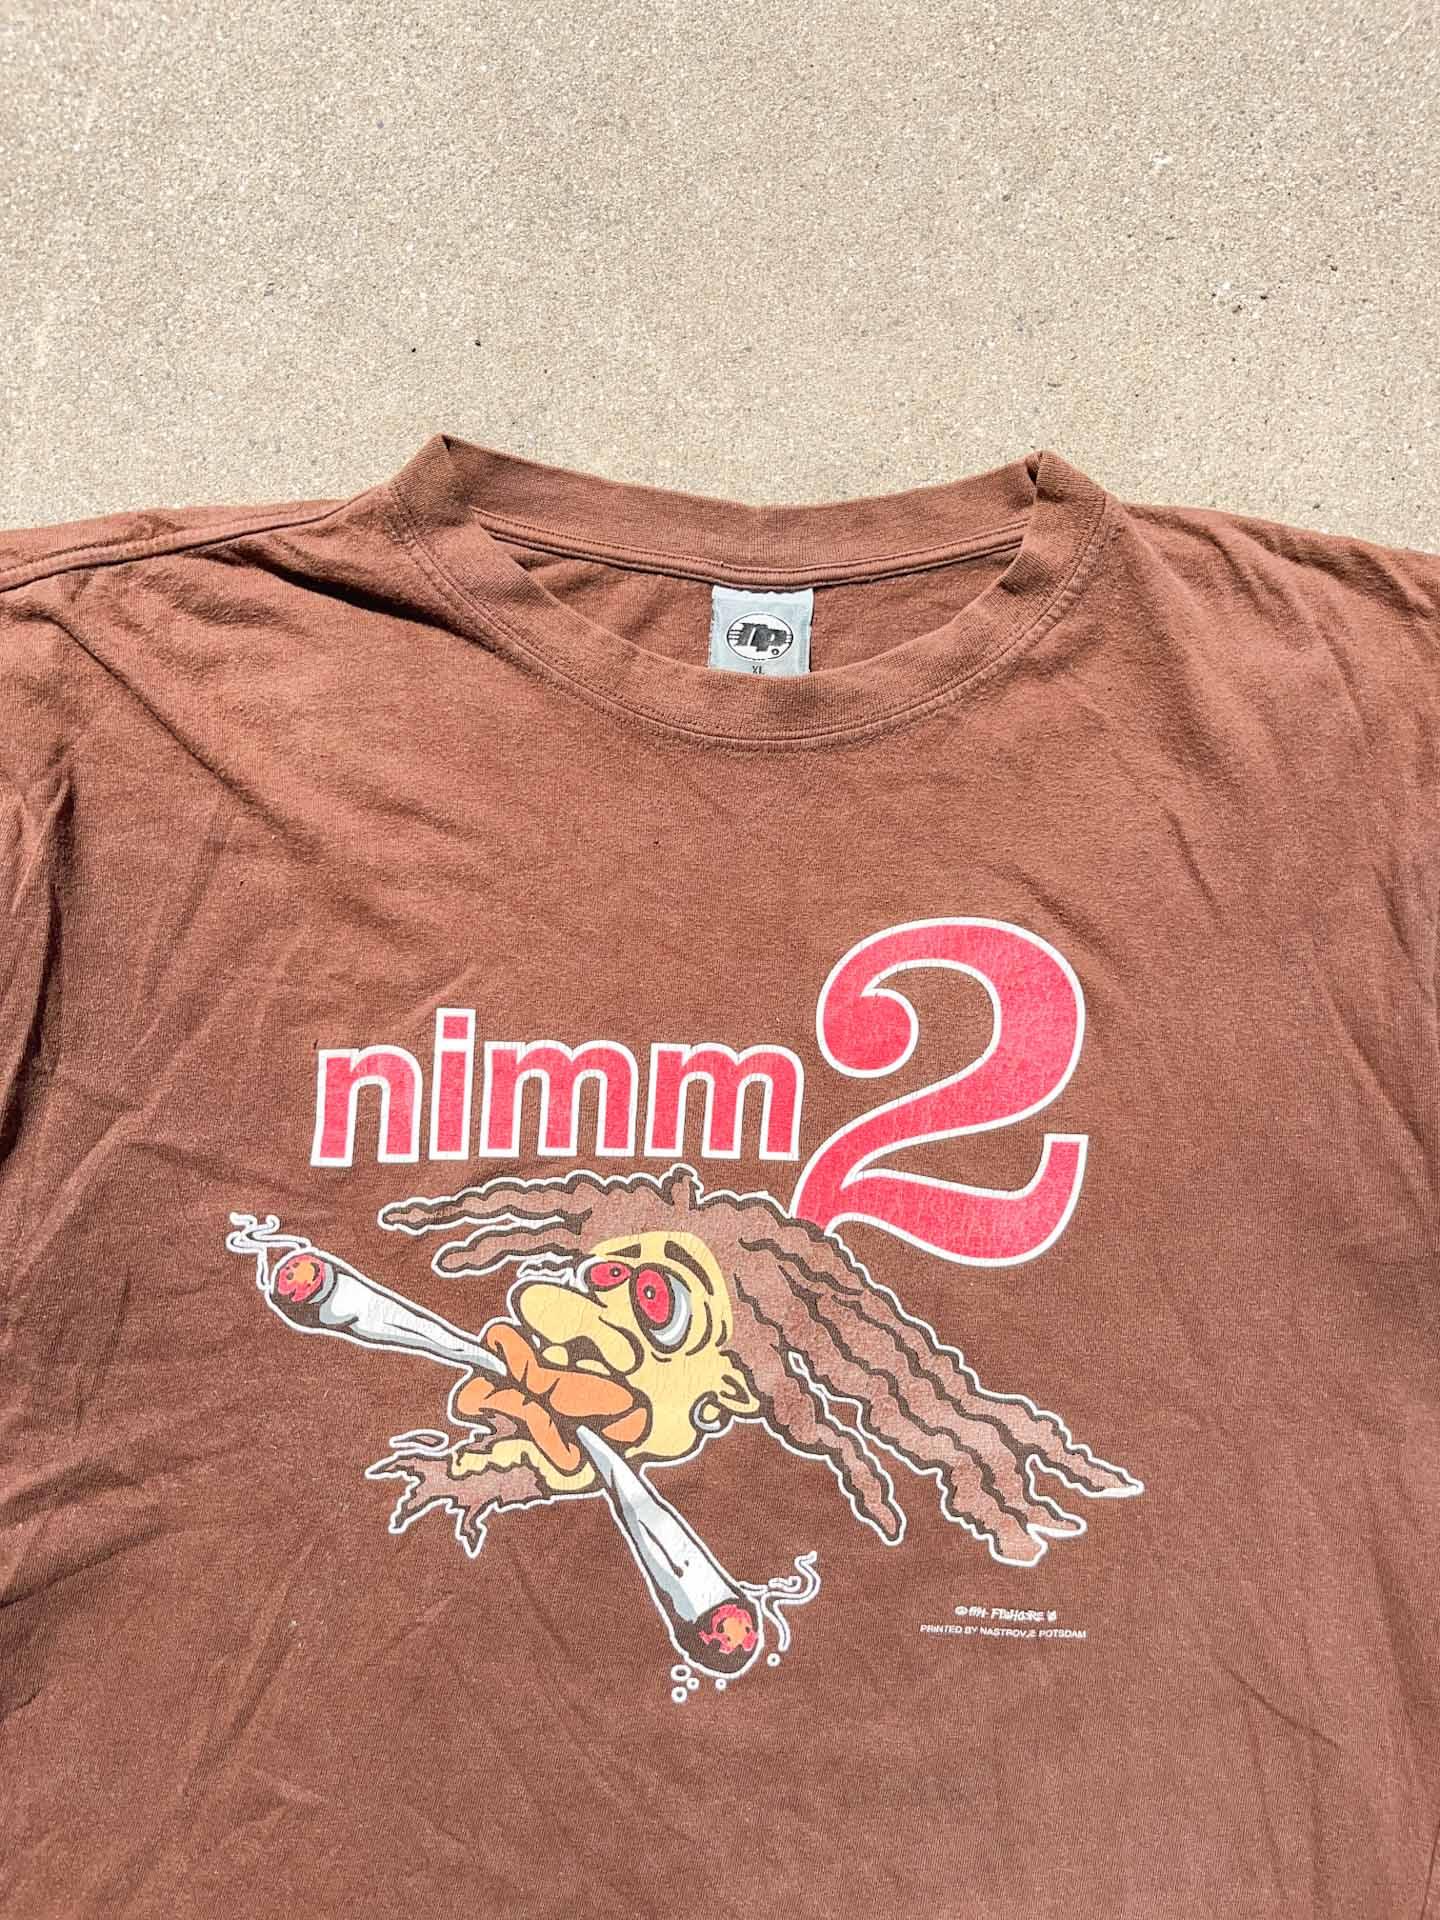 1991 nimm2 shirt - secondvintage